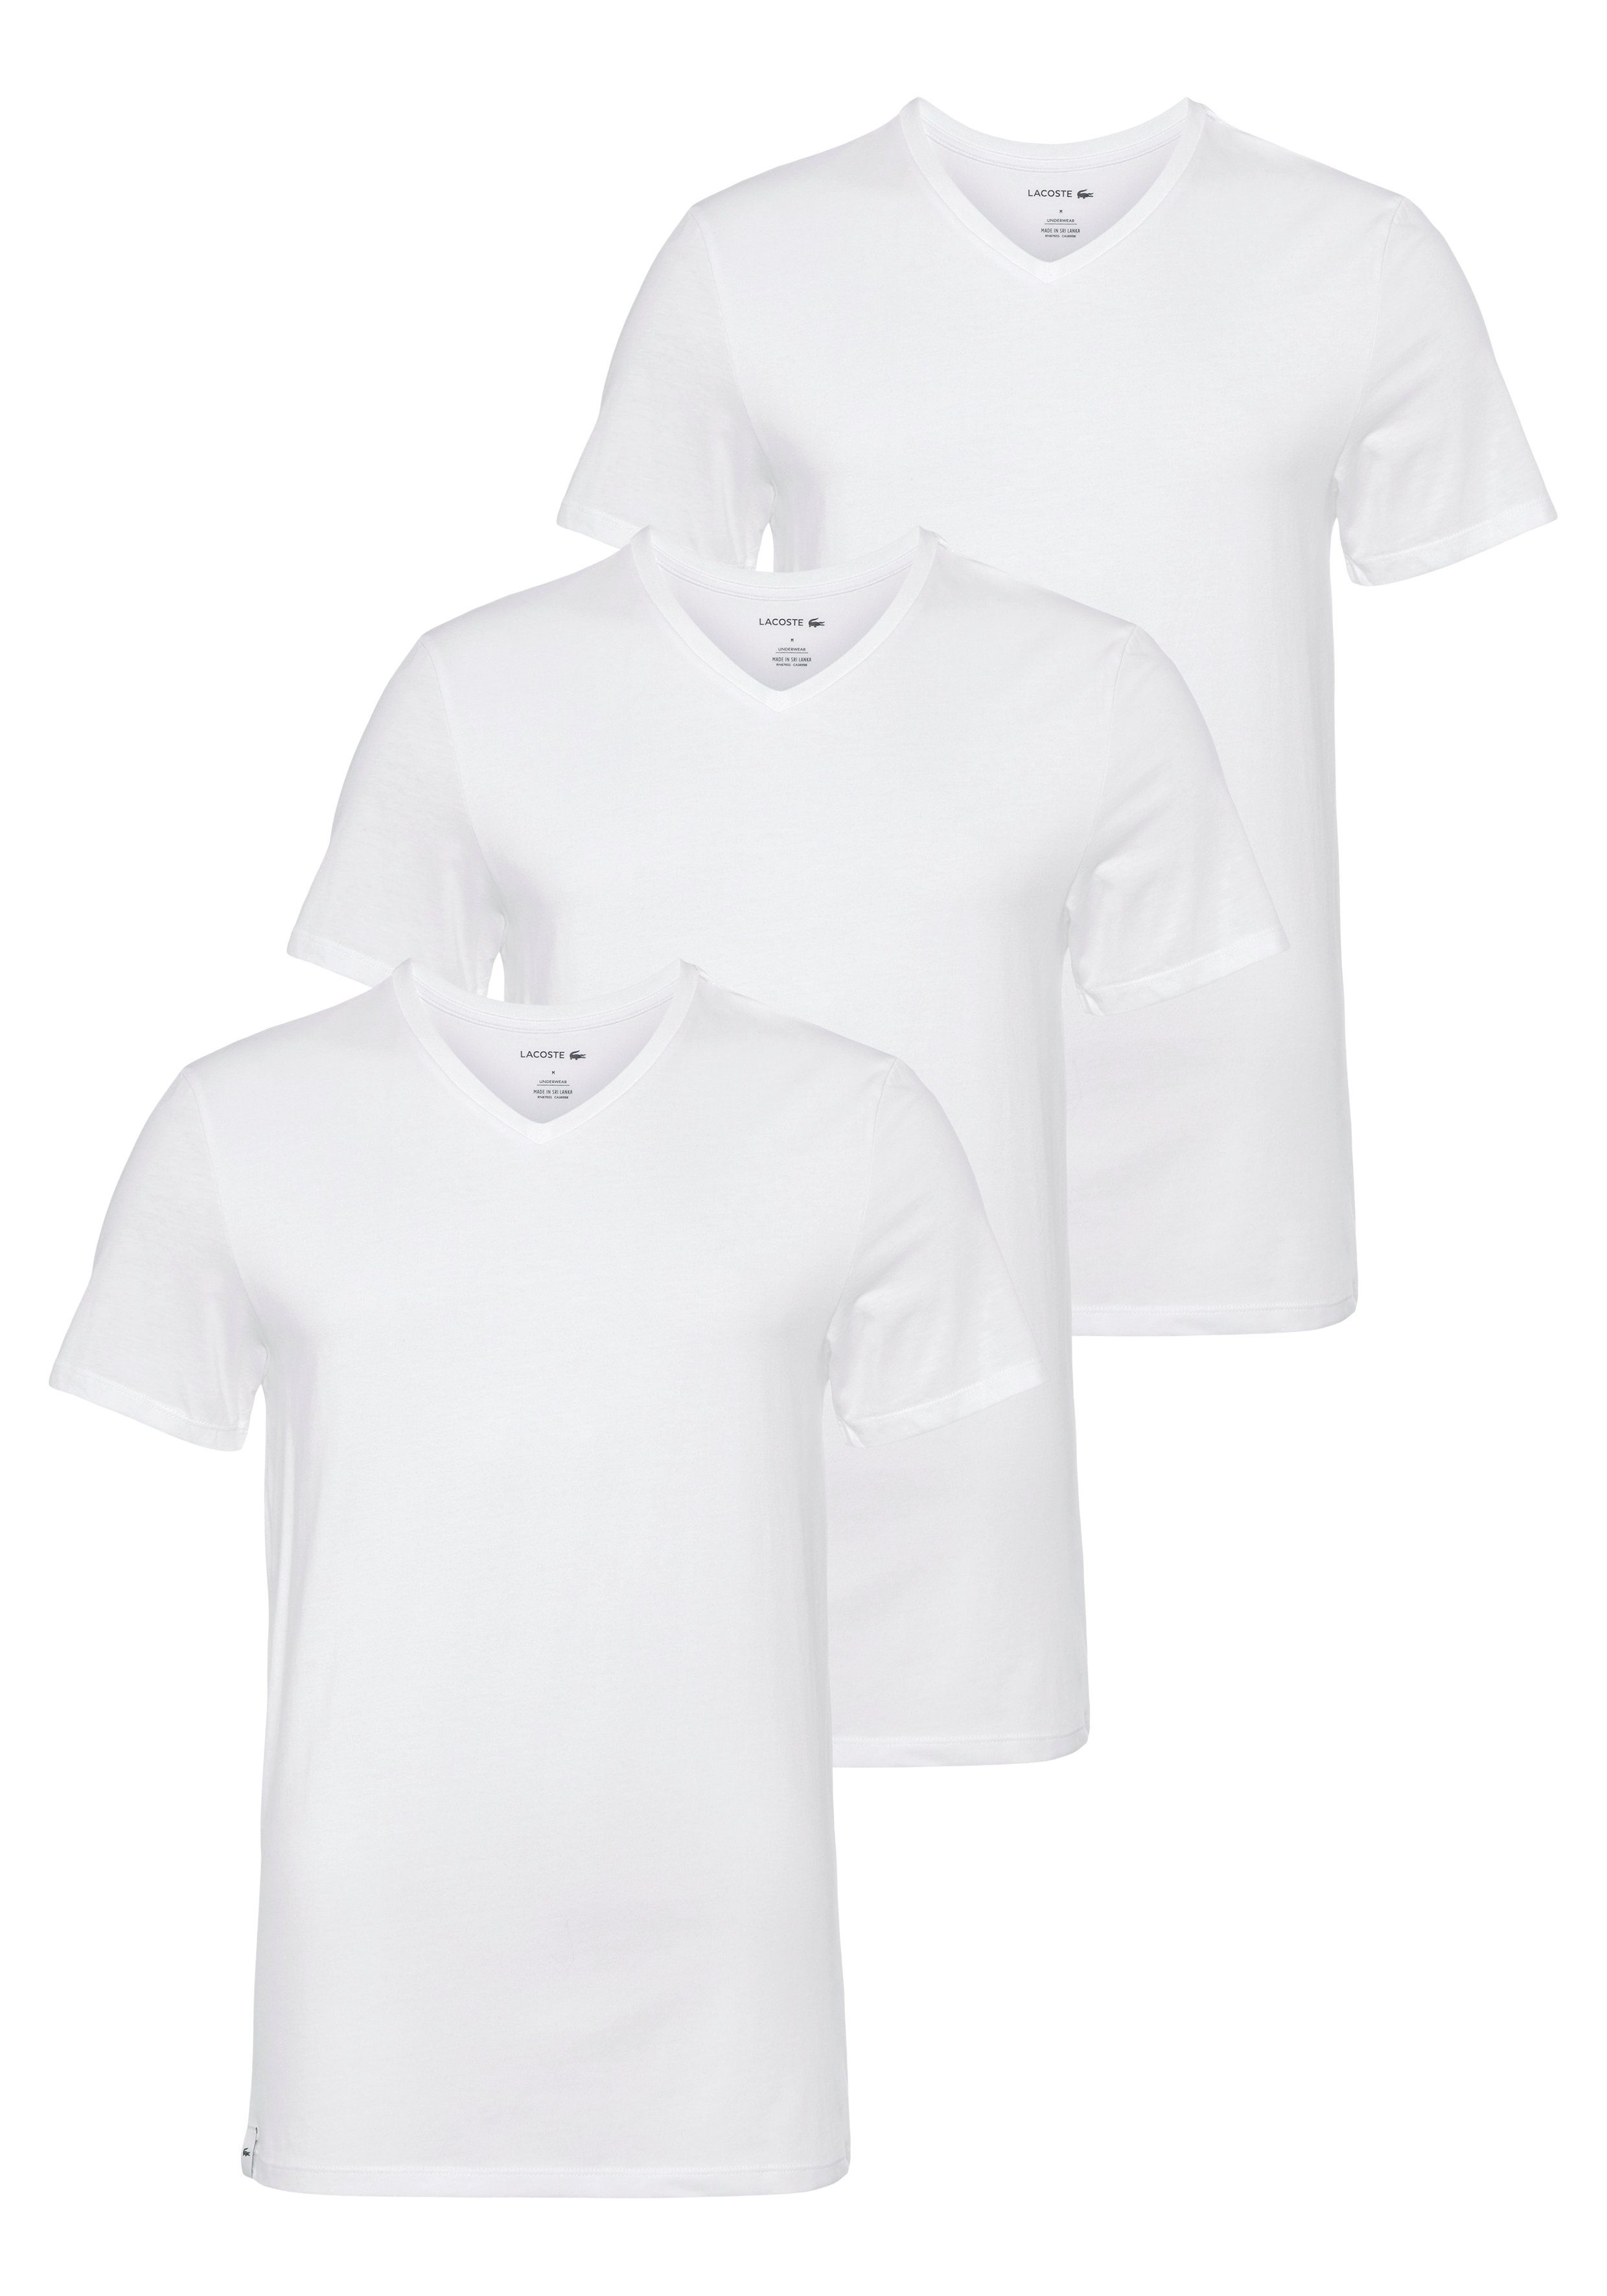 (Packung, 3er-Pack) V-Shirt Lacoste Look im weiß unifarbenen